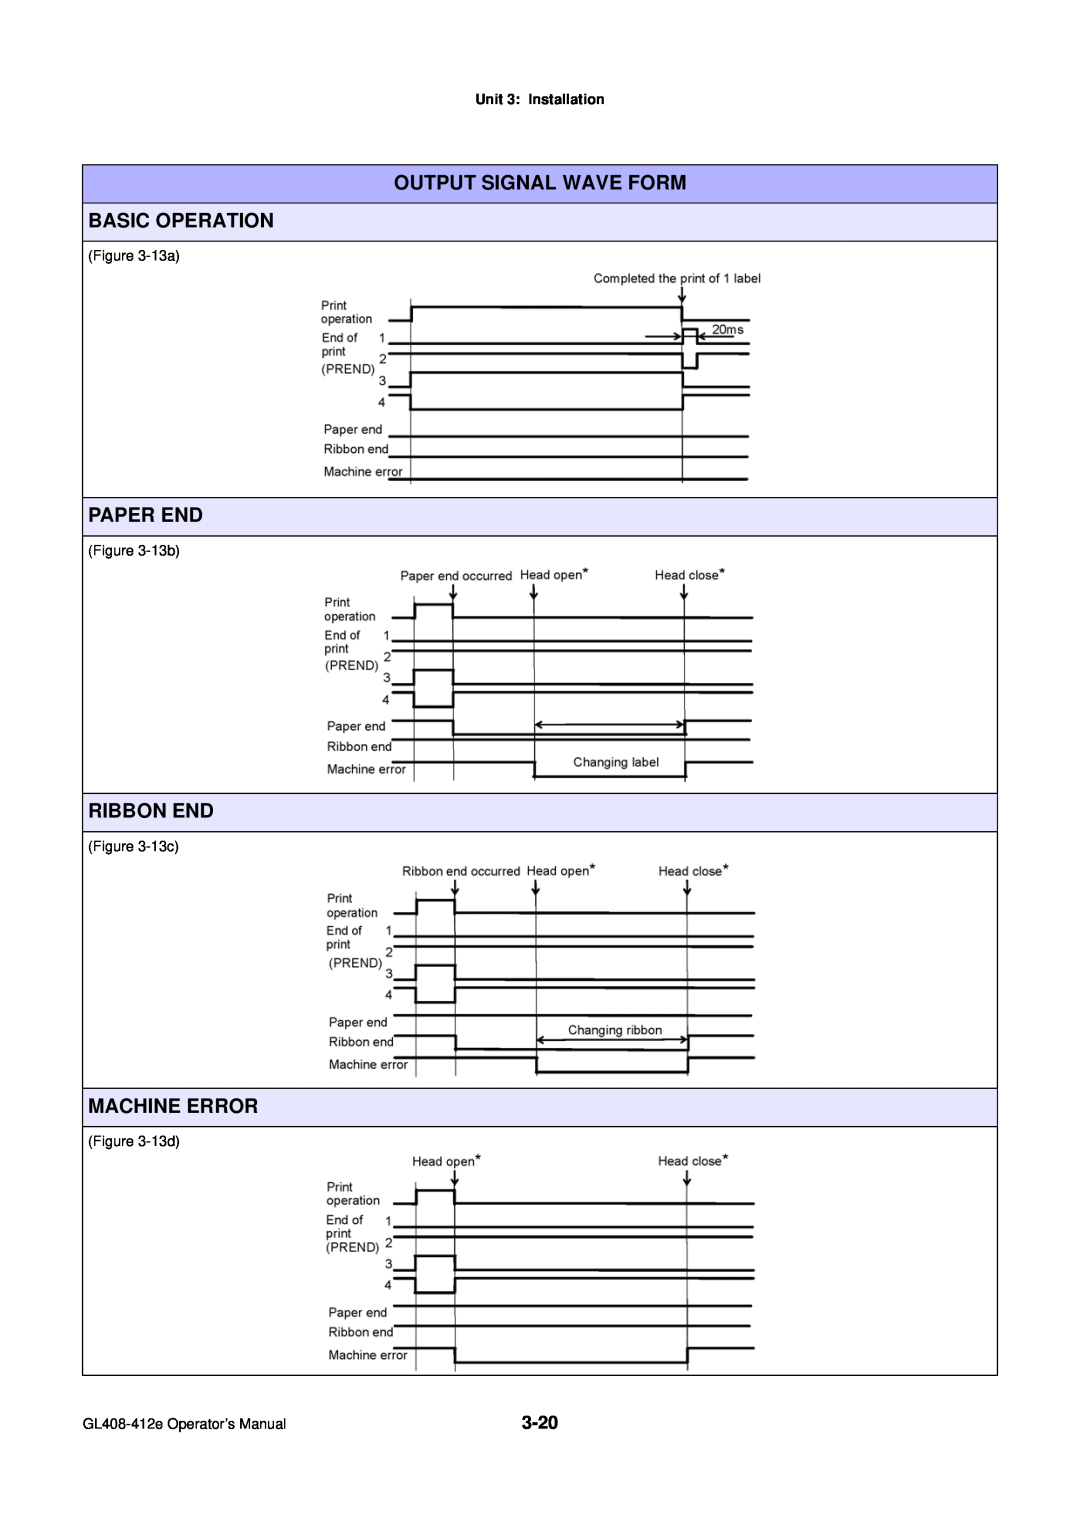 SATO GL4XXE manual Output Signal Wave Form Basic Operation, Paper End, Ribbon End, Machine Error, Unit 3 Installation 